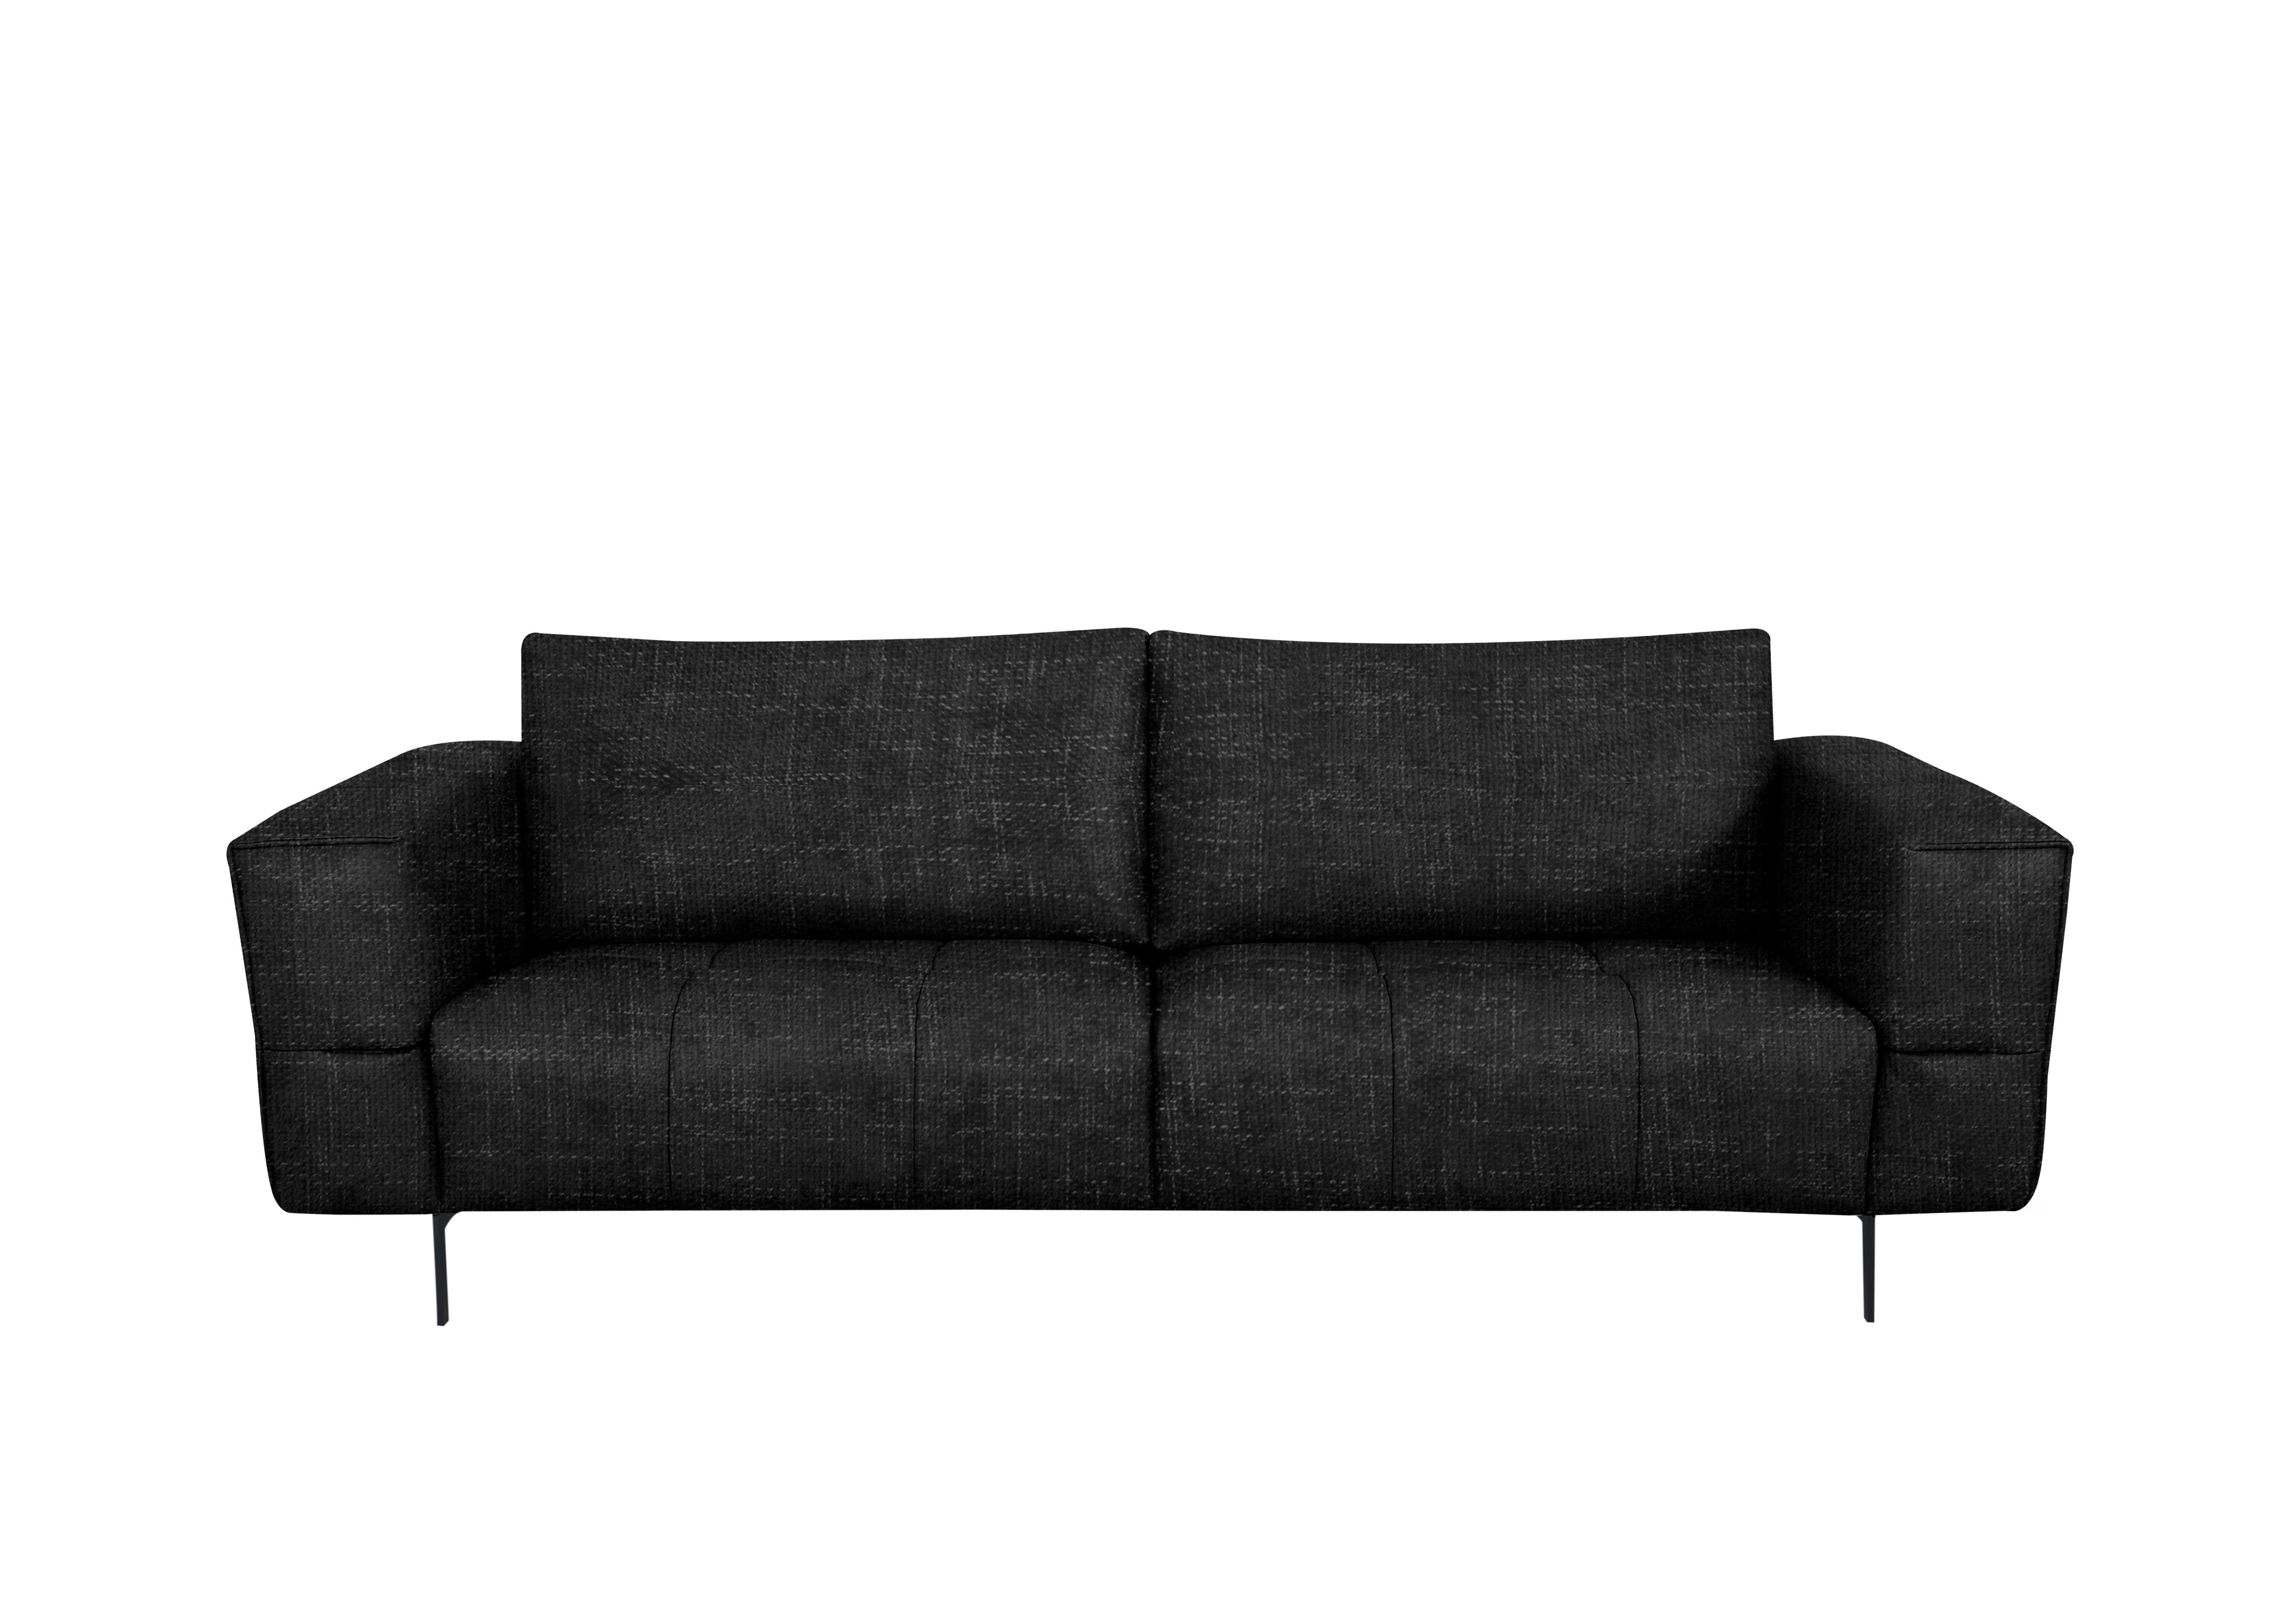 Lawson 3 Seater Fabric Sofa in Fab-Cac-R463 Black Mica on Furniture Village